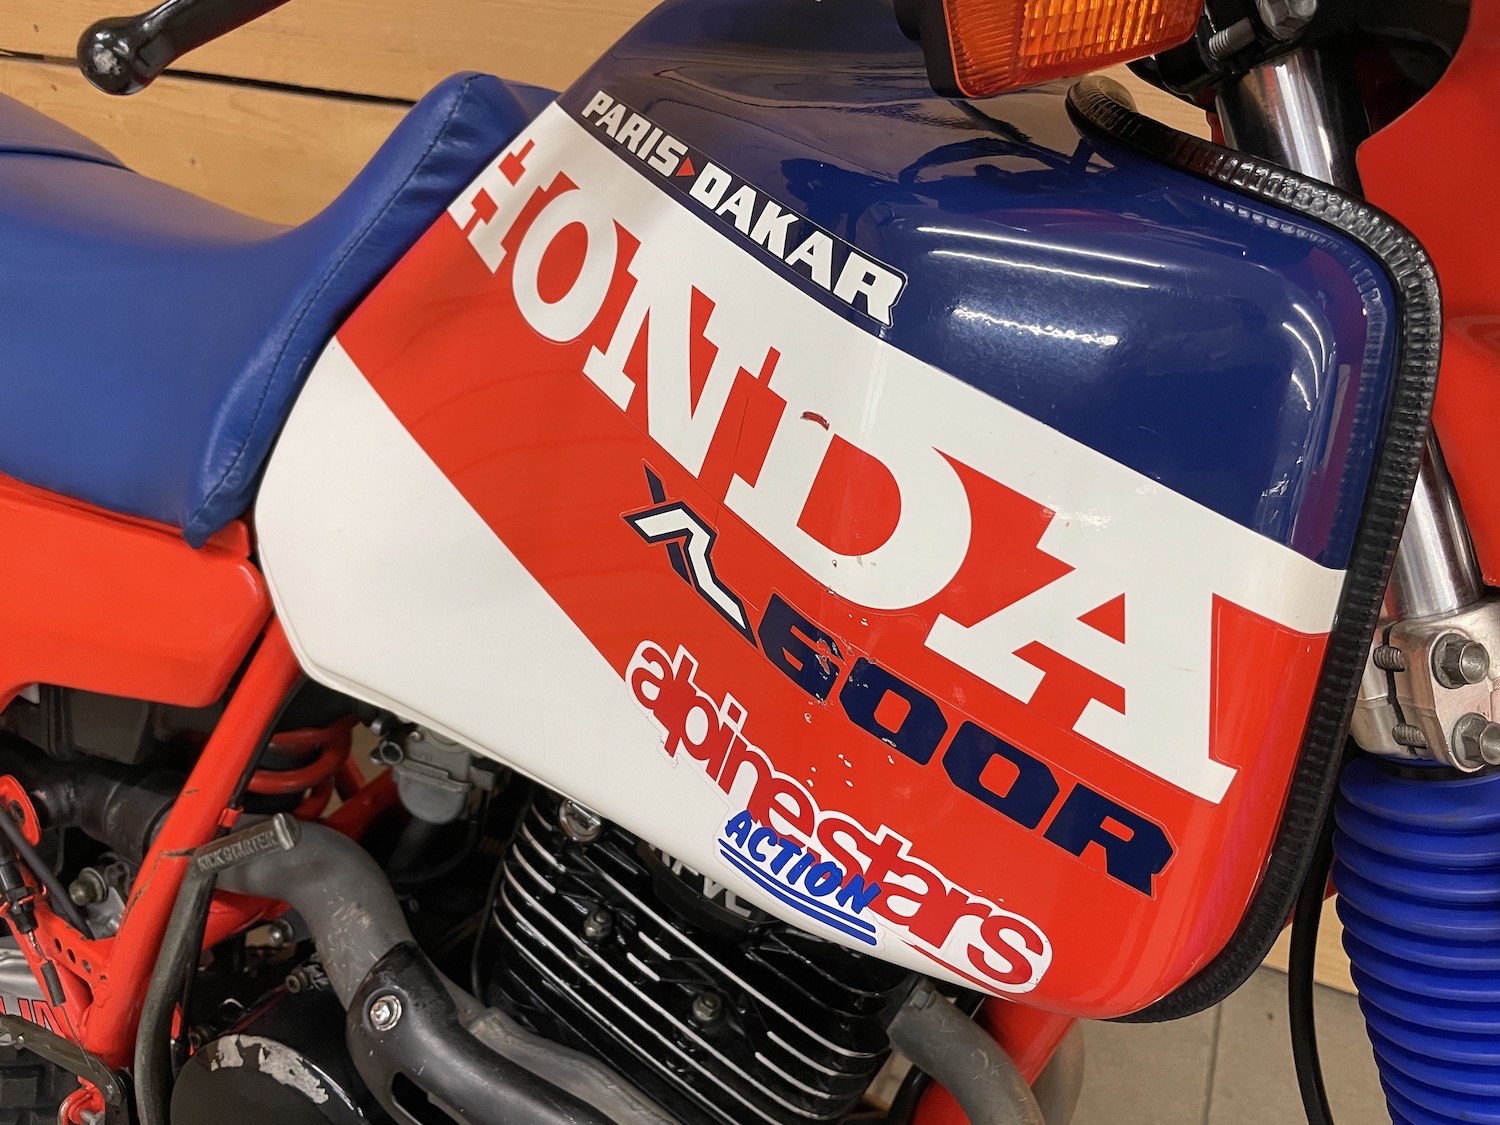 Honda_XL600R_ParisDakar_84_cezanne_classic_motorcycle_2-117.jpg